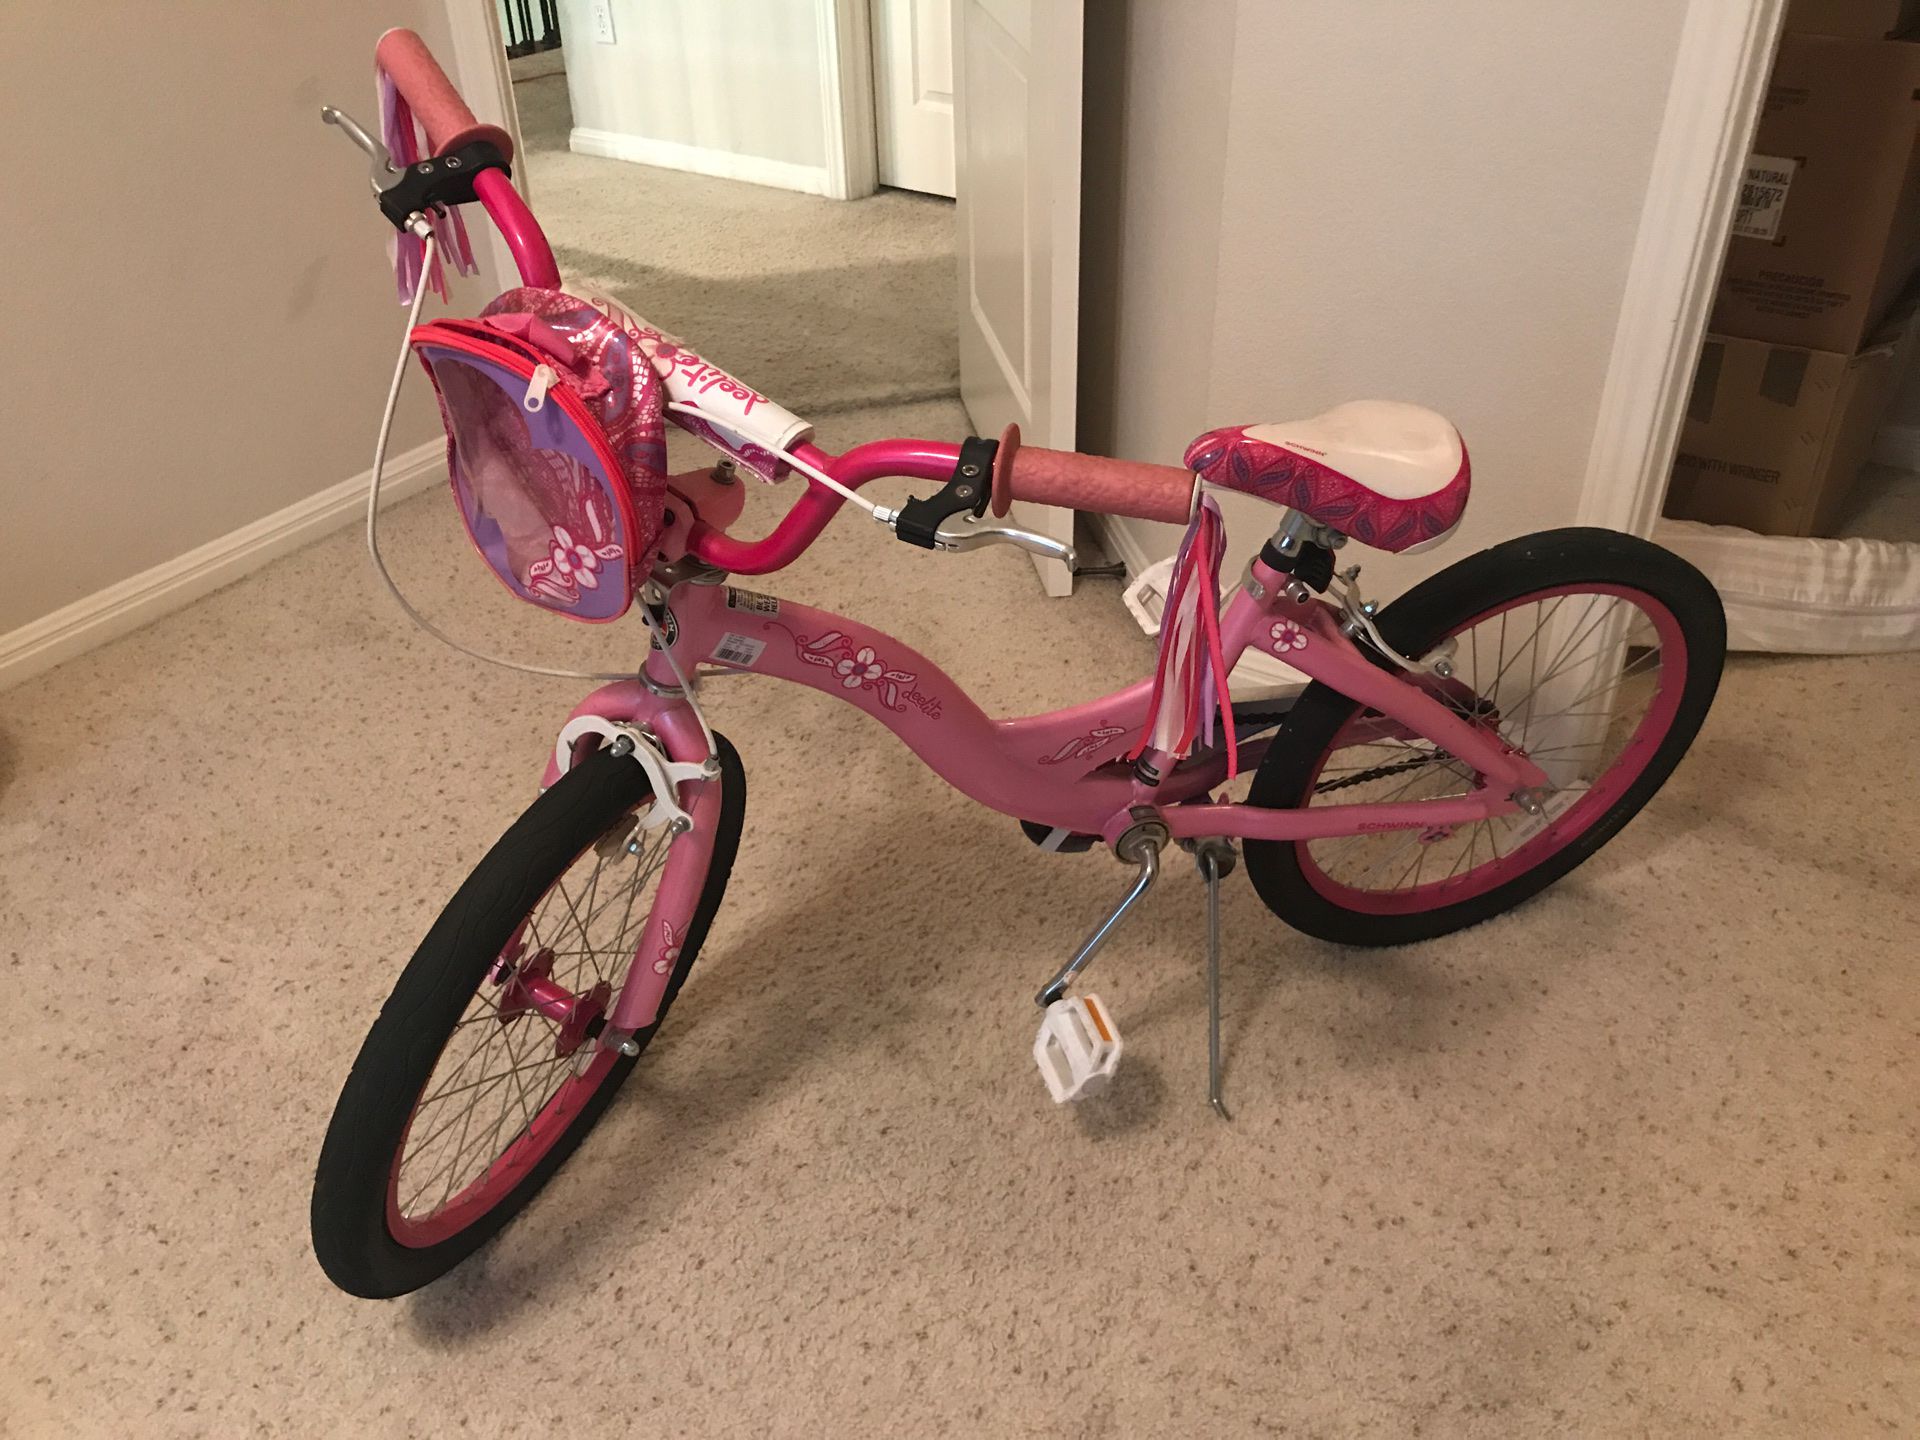 Schwin kids bike girls pink 16 inch wheels for ages 4-8